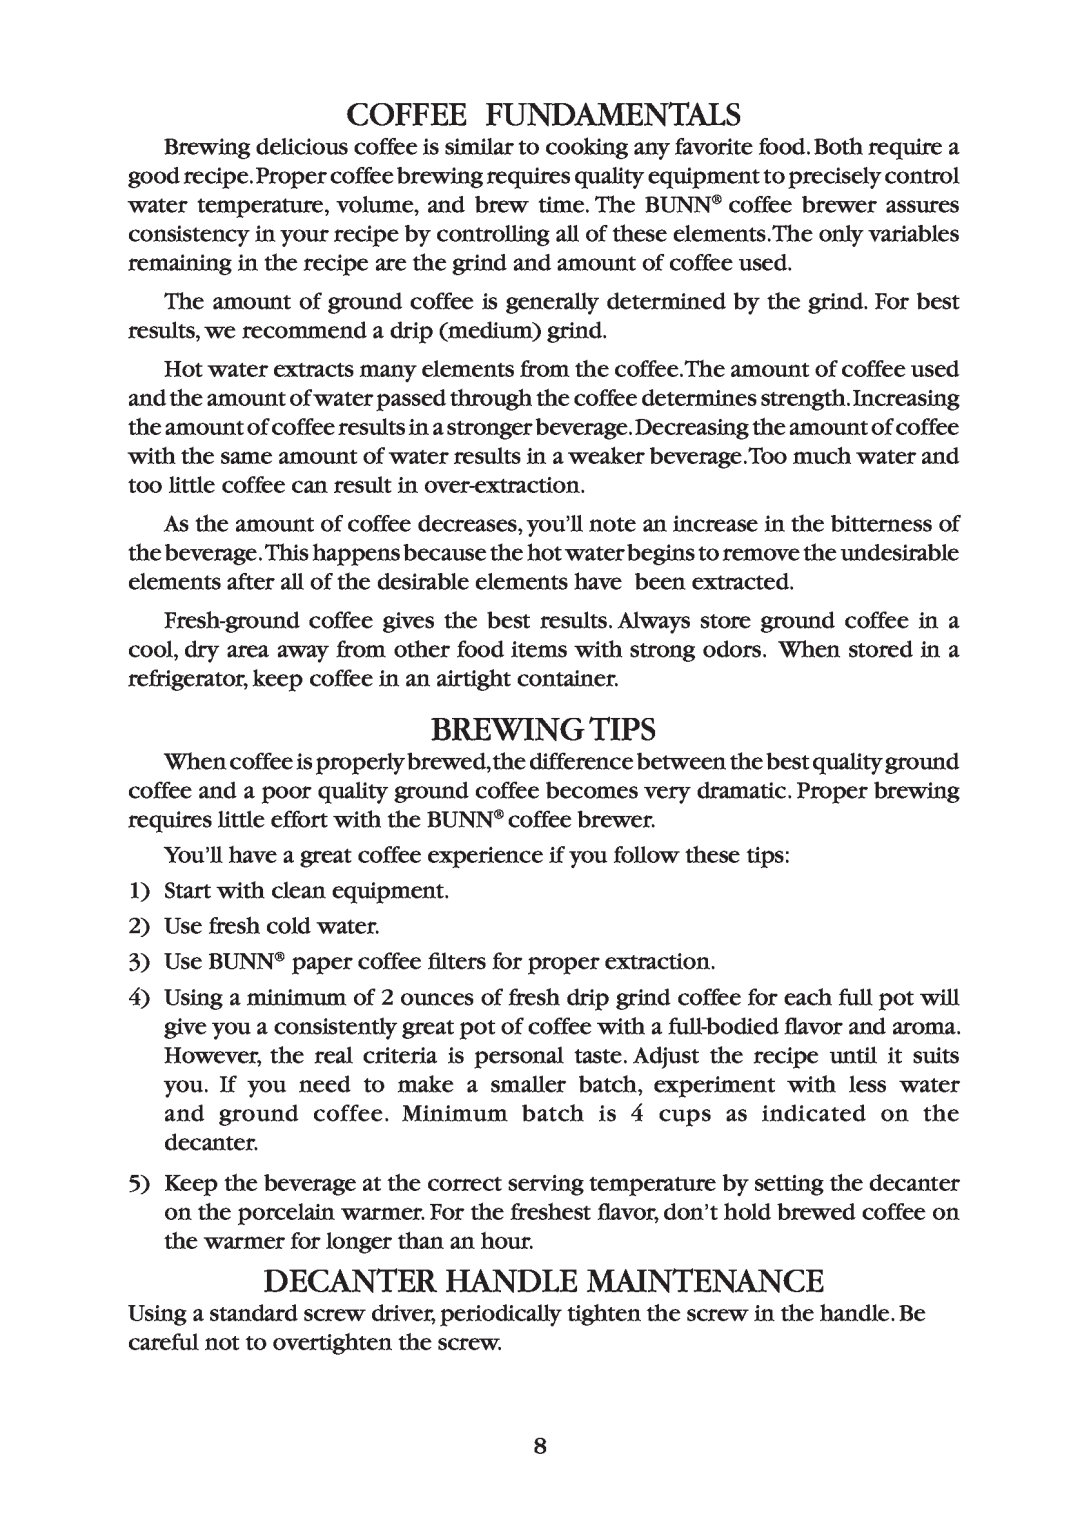 Bunn GR10, B10 manual Coffee Fundamentals, Brewing Tips, Decanter Handle Maintenance 